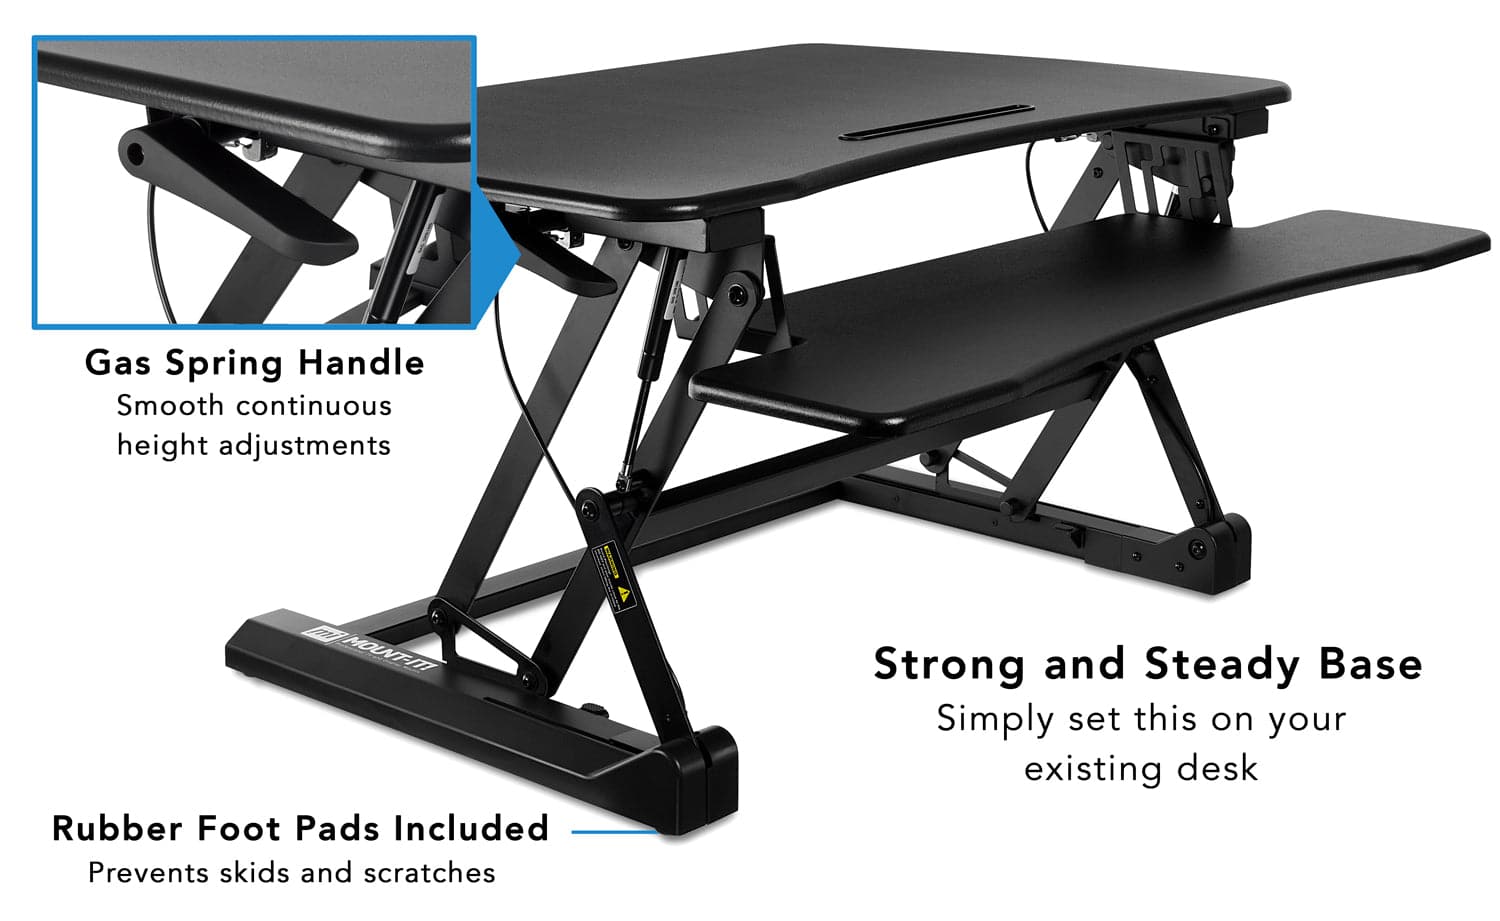 Mount-It! 35.5 in. Black Standing Desk Converter Height Adjustable Large Surface Area